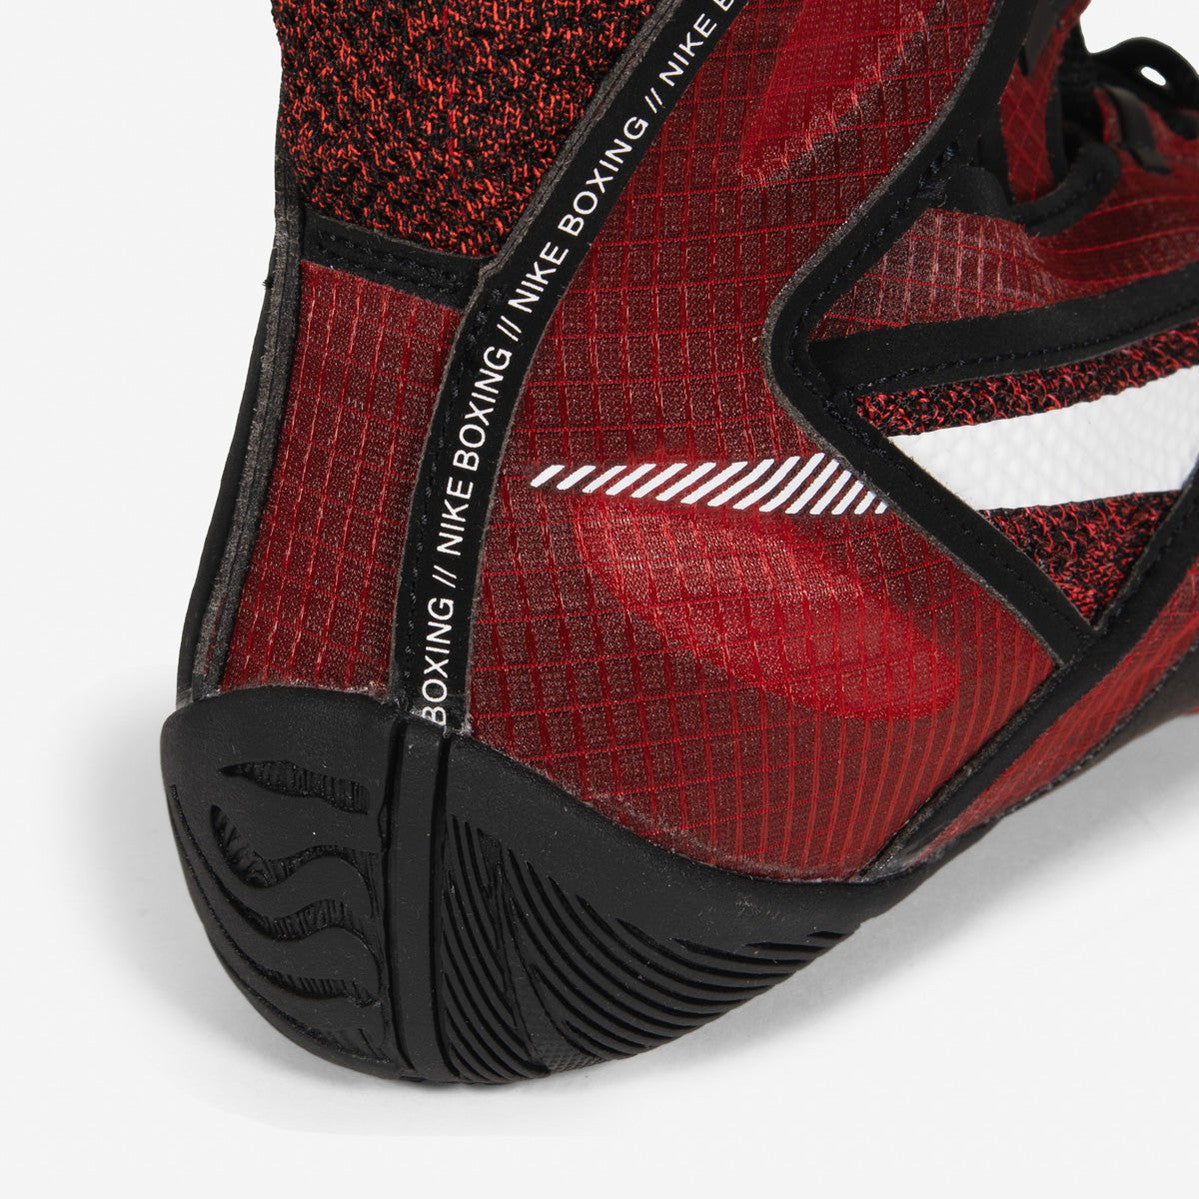 Buty Bokserskie Nike Hyperko 2.0 Red